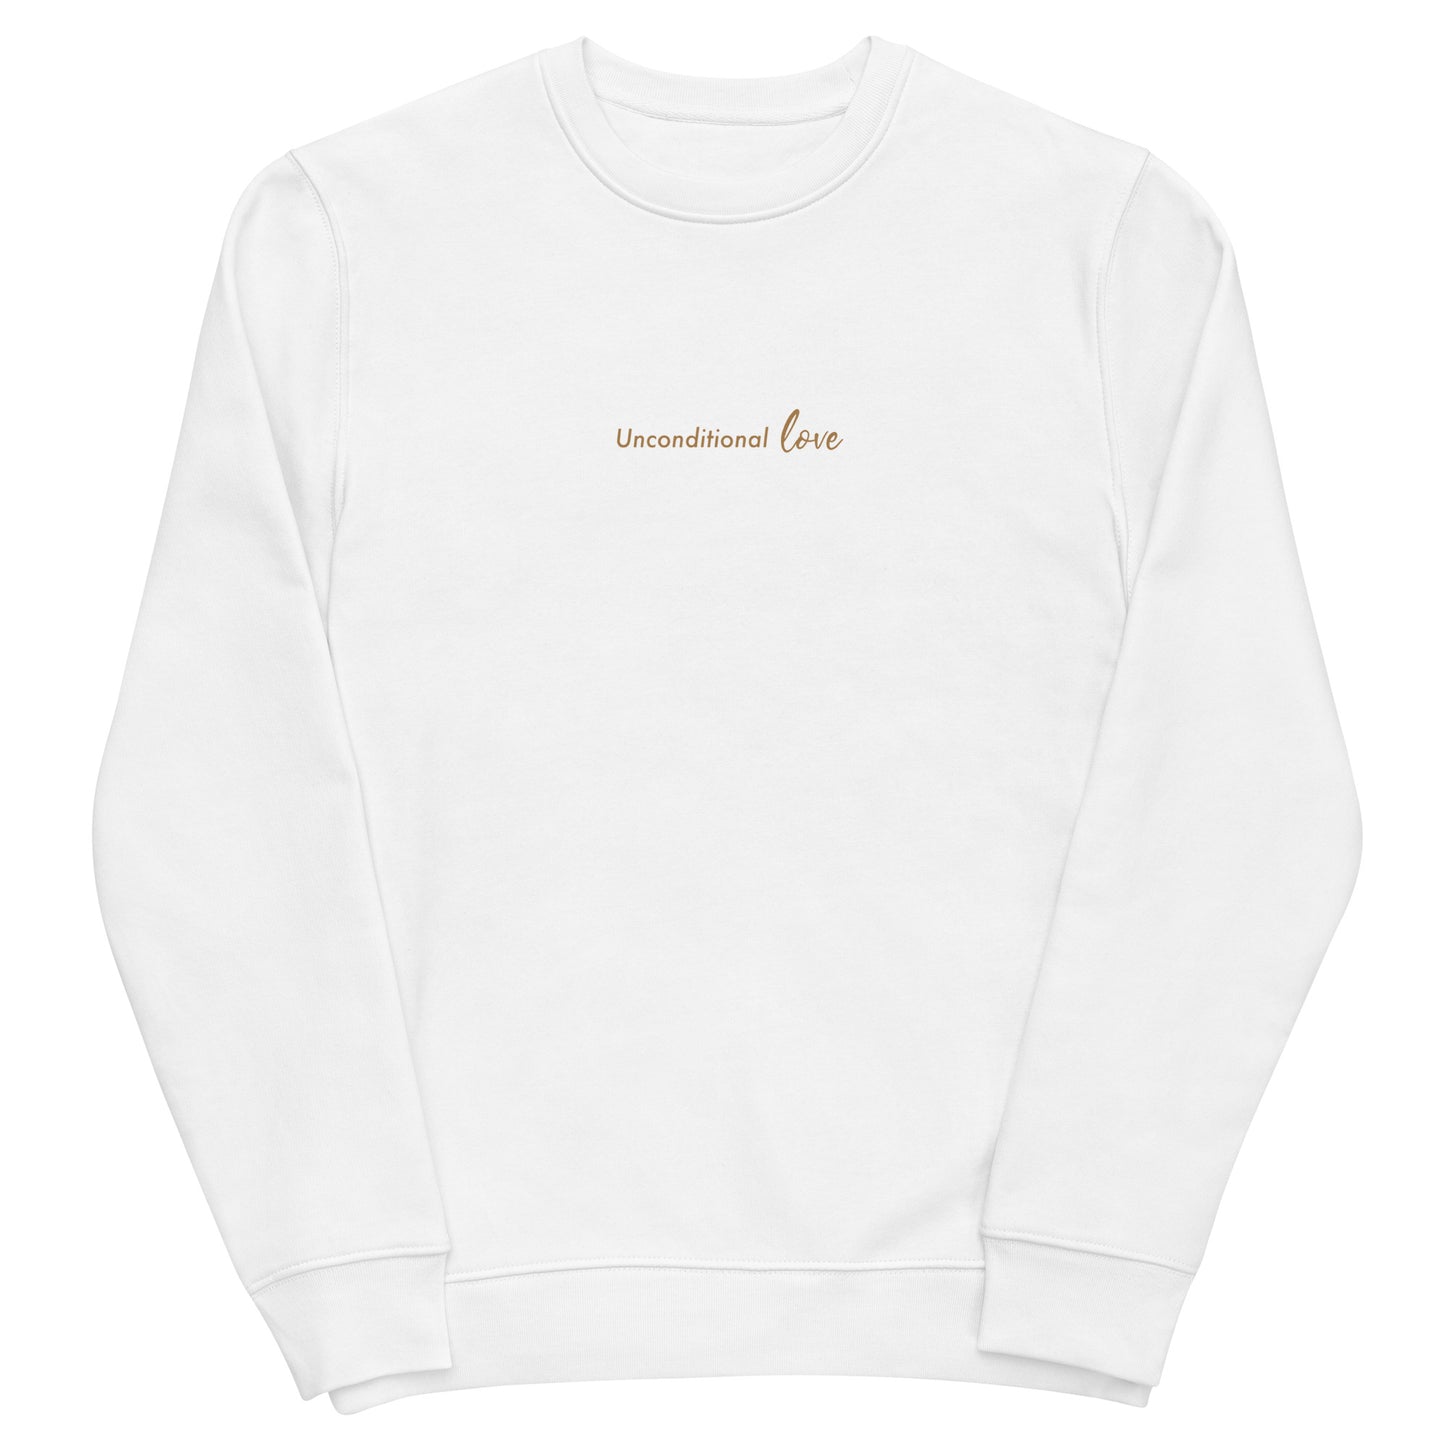 Unconditional Love Men's Organic Cotton Sweatshirt